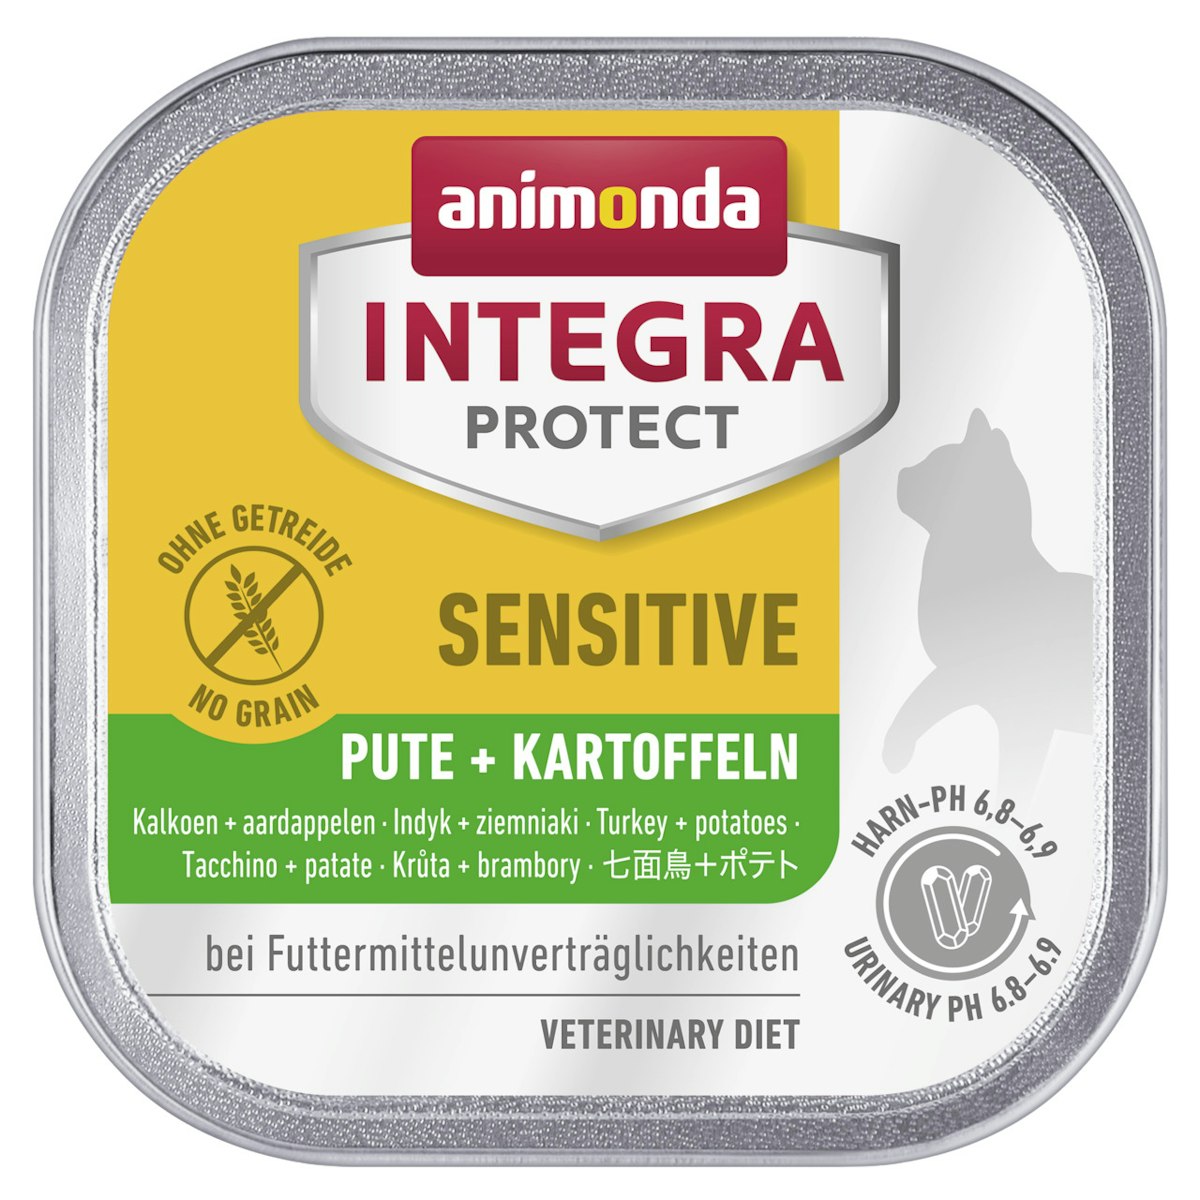 animonda Integra Protect Sensitive 100g Schale Katzennassfutter von Animonda